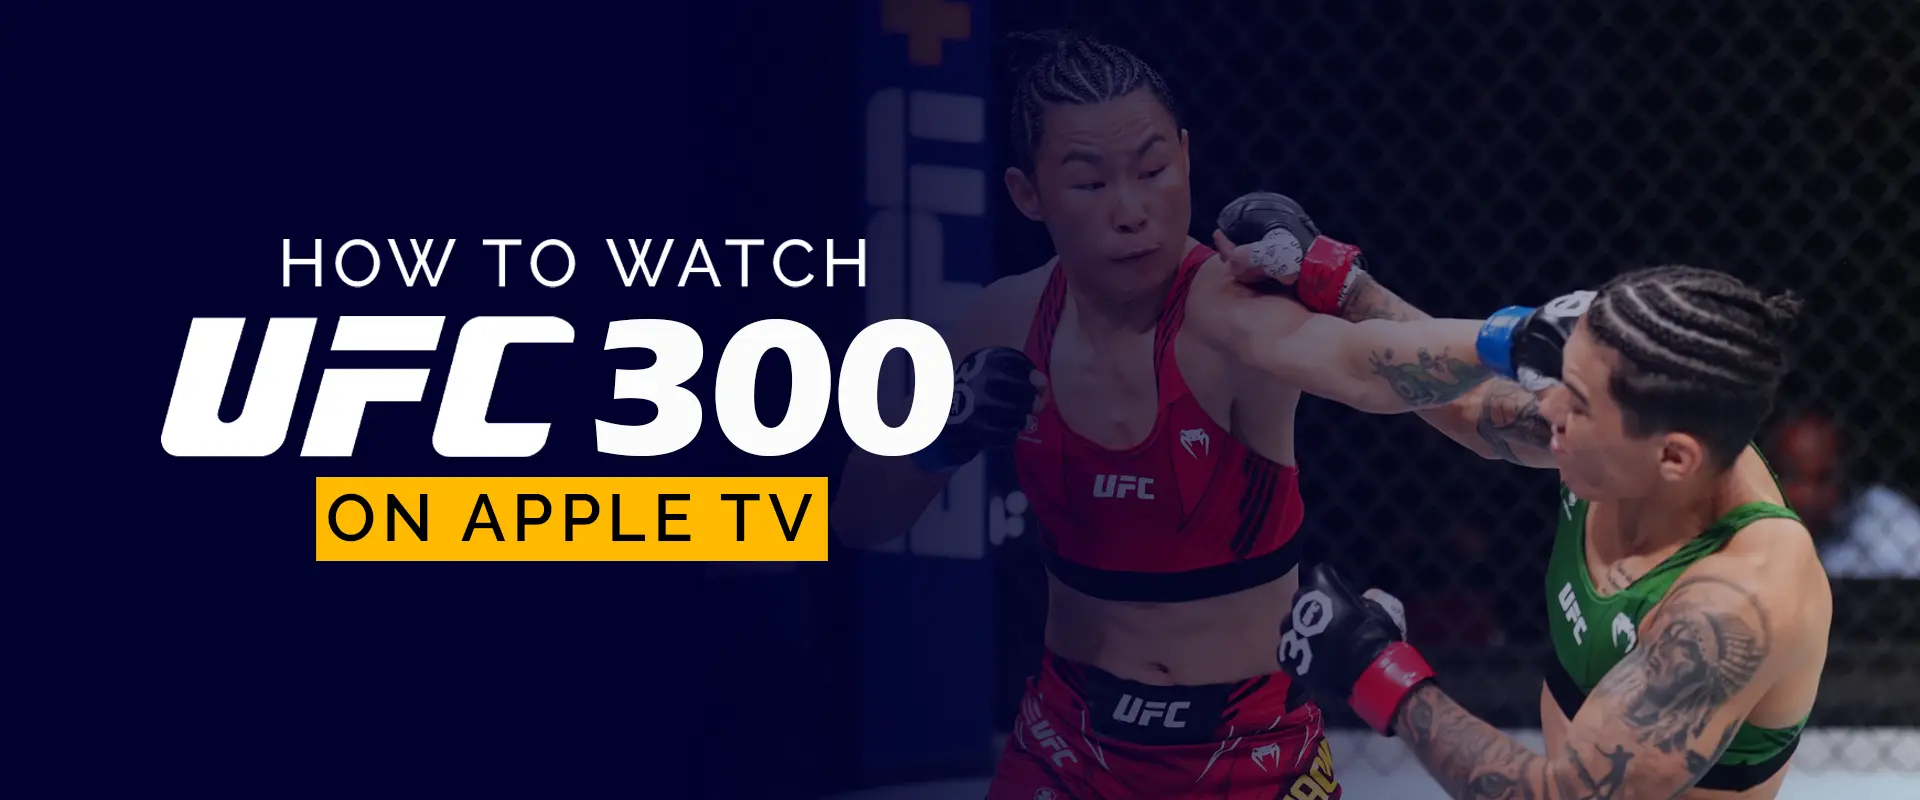 Come guardare UFC 300 su Apple TV